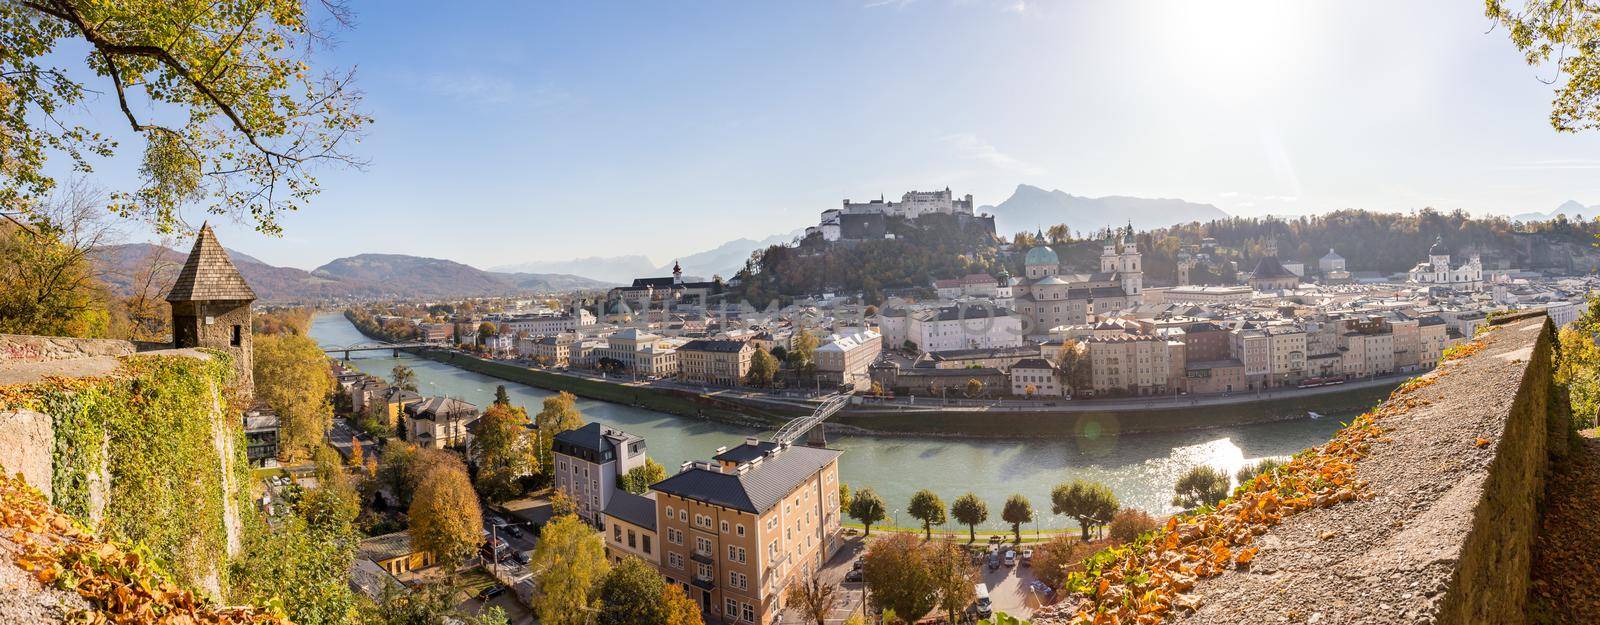 Salzburg old city in autumn, colorful sunshine, Austria. Panorama by Daxenbichler